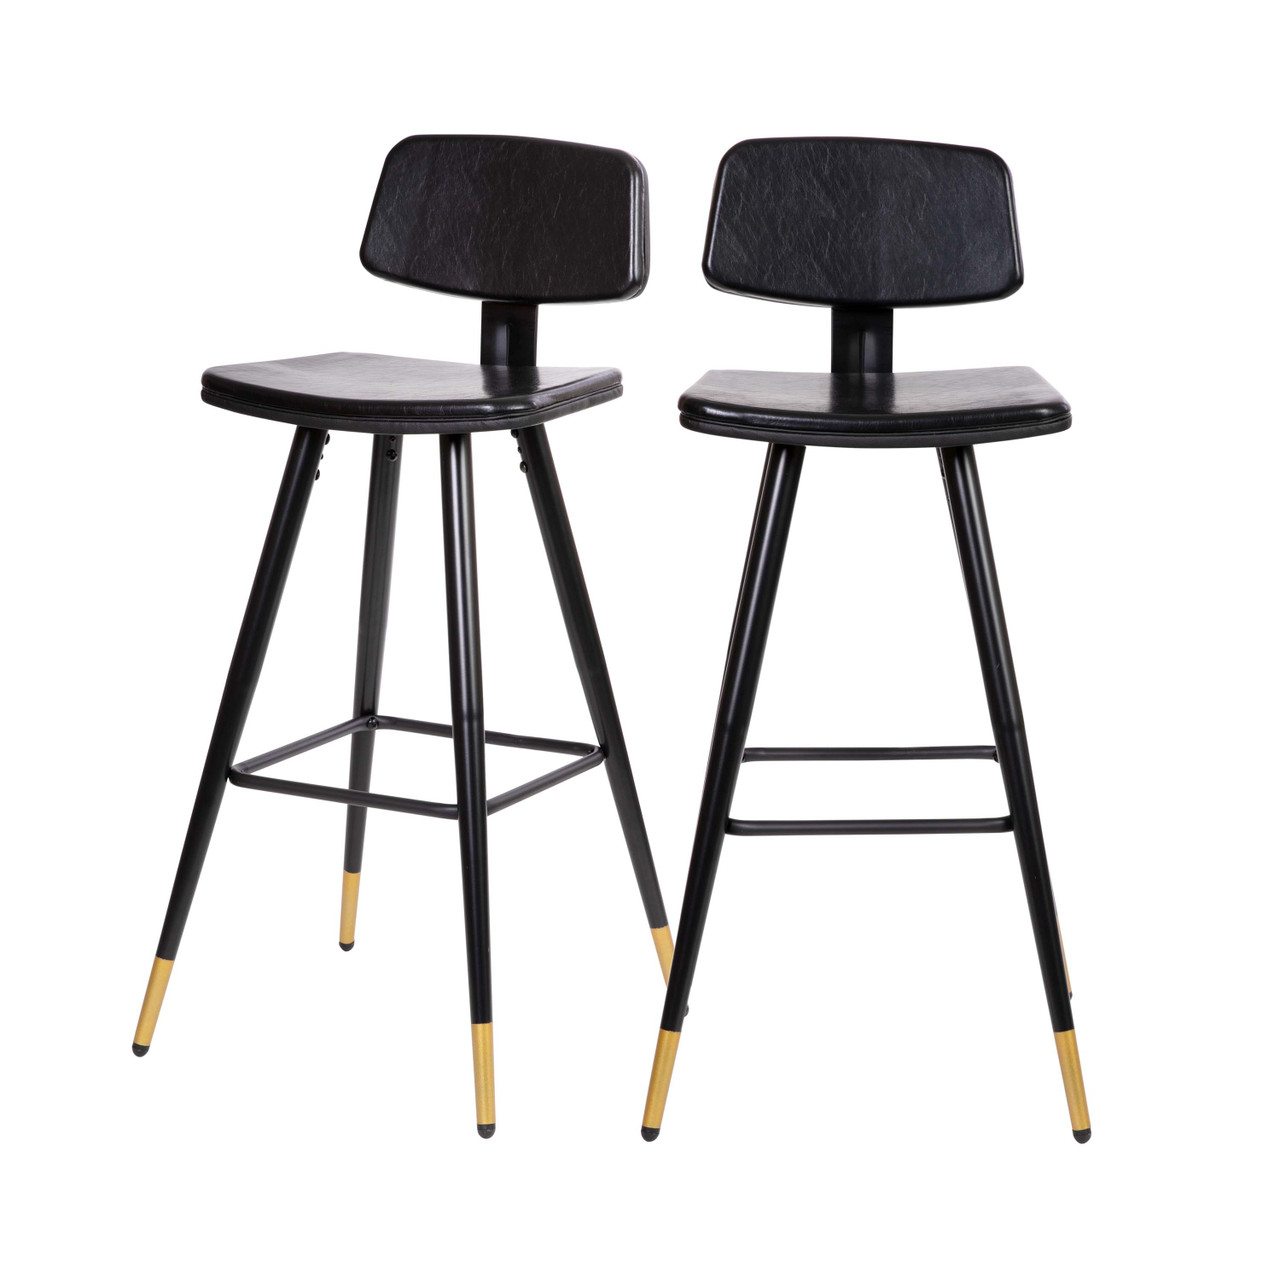 Flash Furniture Kora Commercial Grade Low Back Barstools-Black LeatherSoft Upholstery-Black Iron Frame-Integrated Footrest-Gold Tipped Legs-Set of 2,